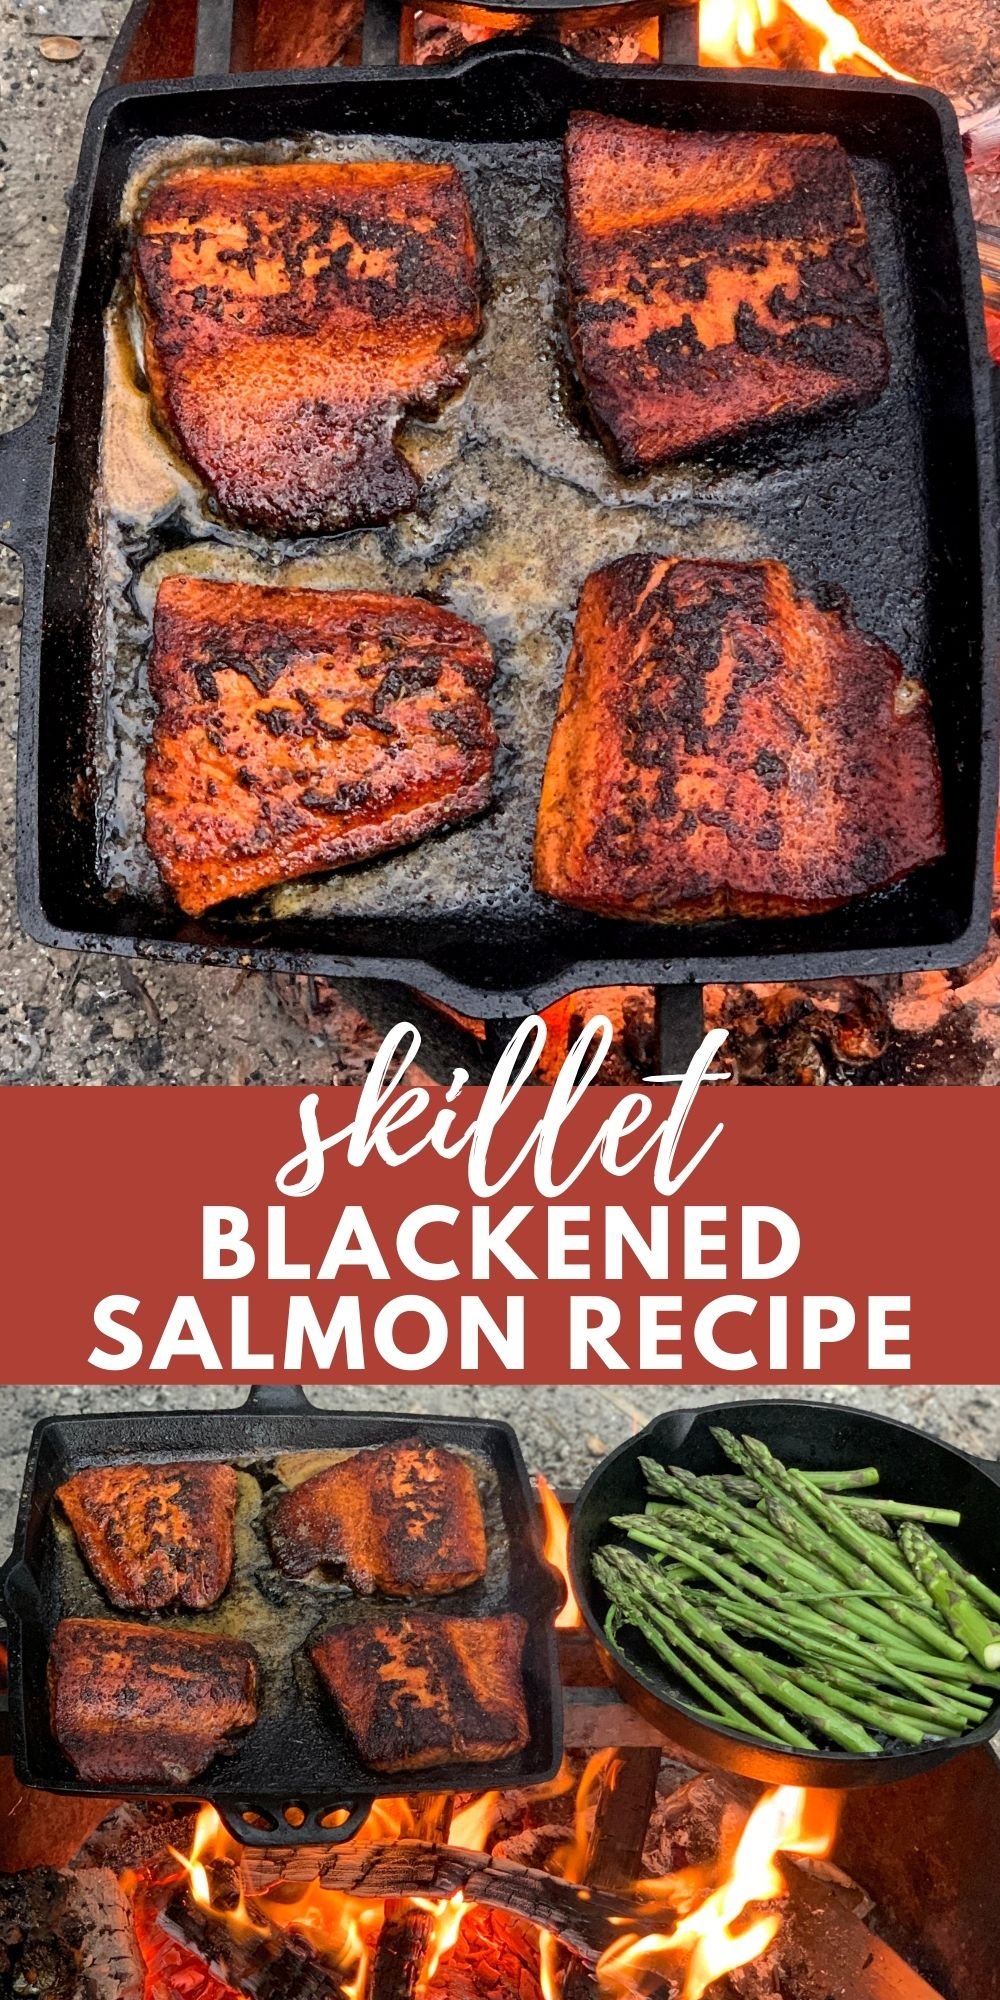 Skillet Blackened Salmon Recipe